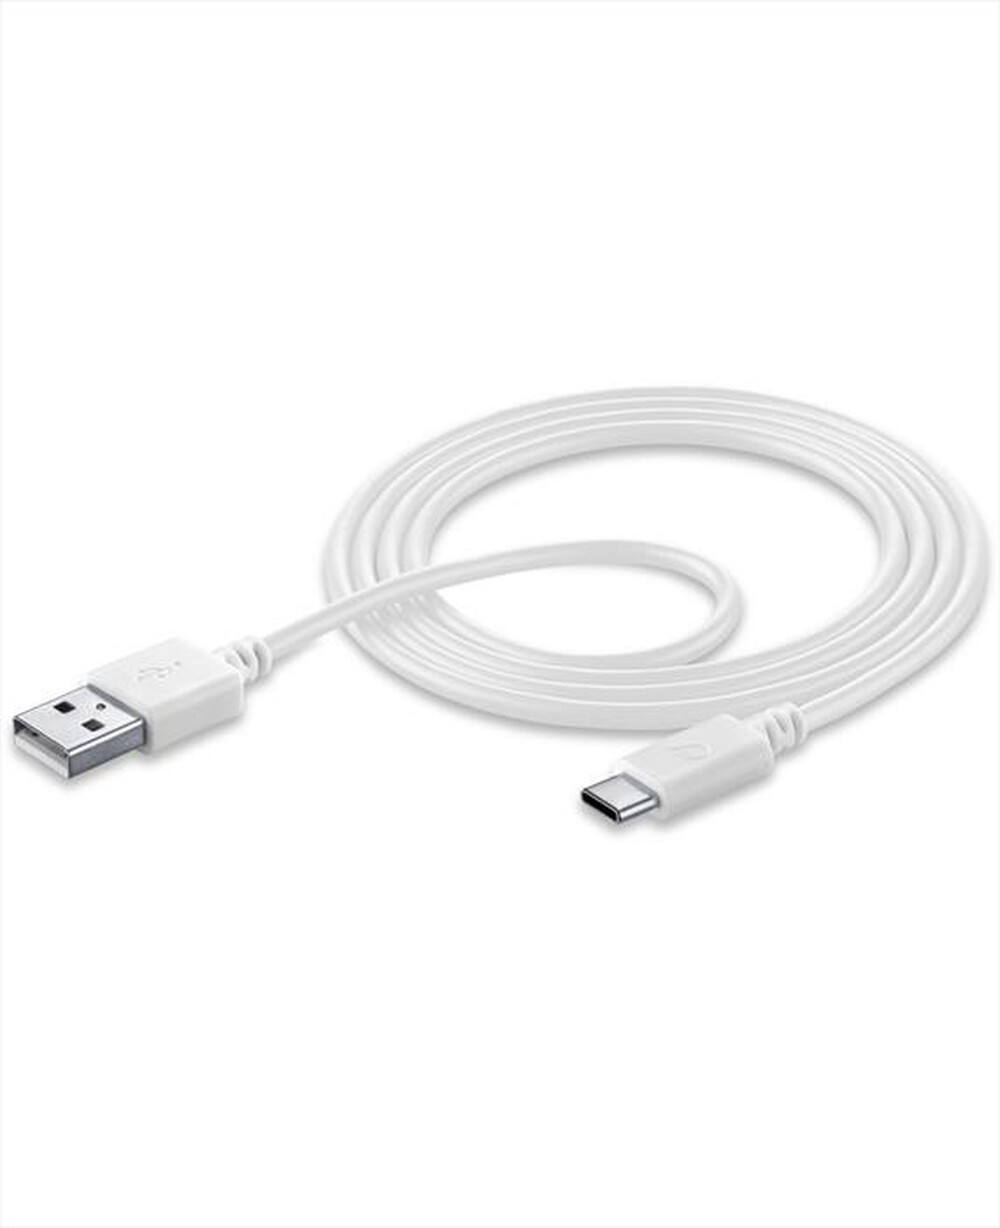 "CELLULARLINE - USBDATACUSBA-CW Cavo USB-Bianco"